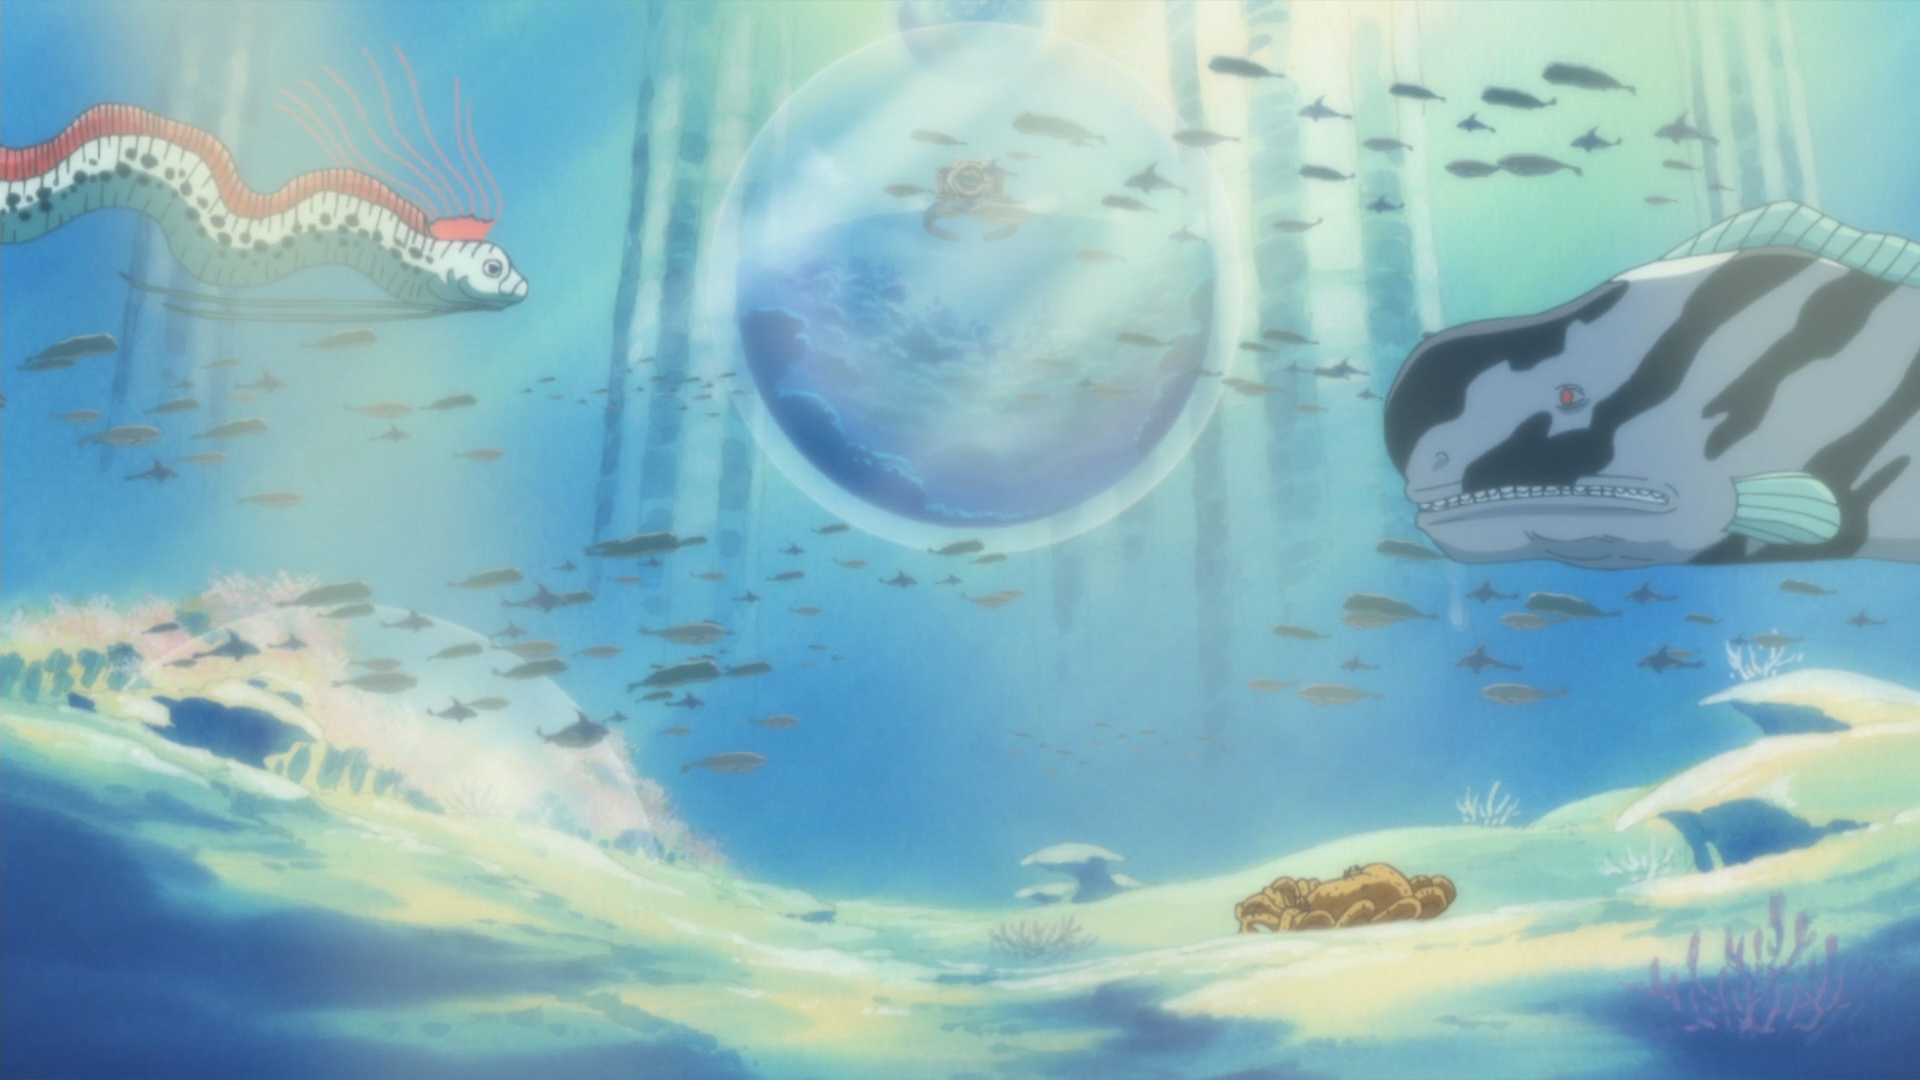 Anime Pirates, Update, Battle of Fishman island, Online Game